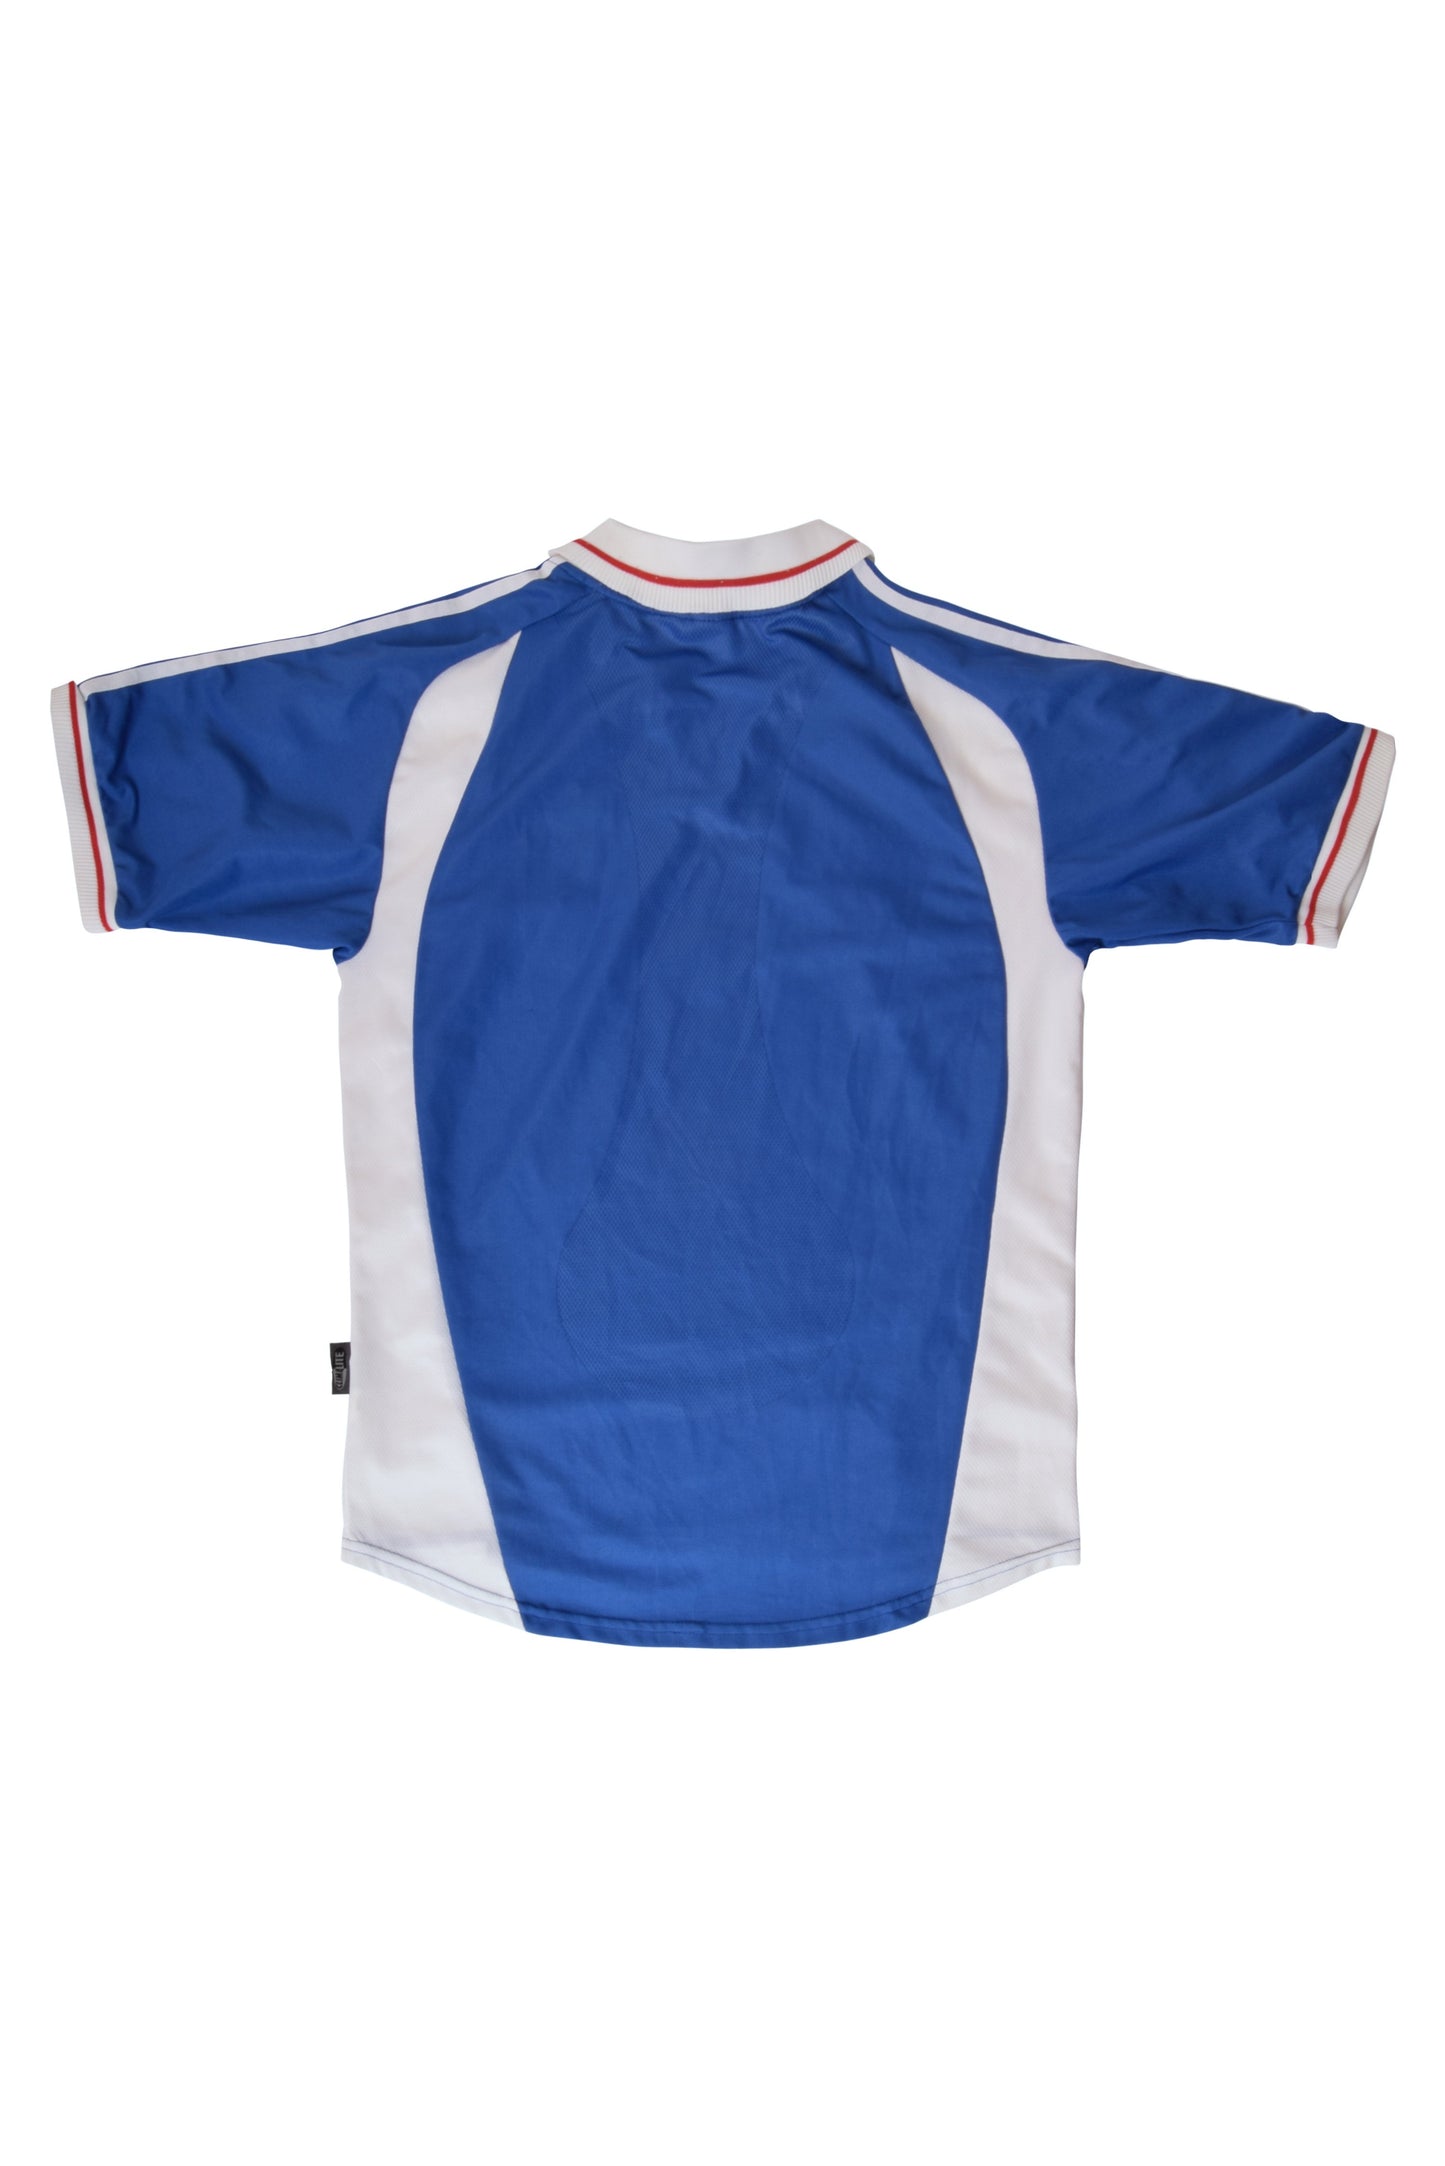 Yugoslavia Adidas 2000-2001 Home Football Shirt Blue Size S Made in England Euro 2000